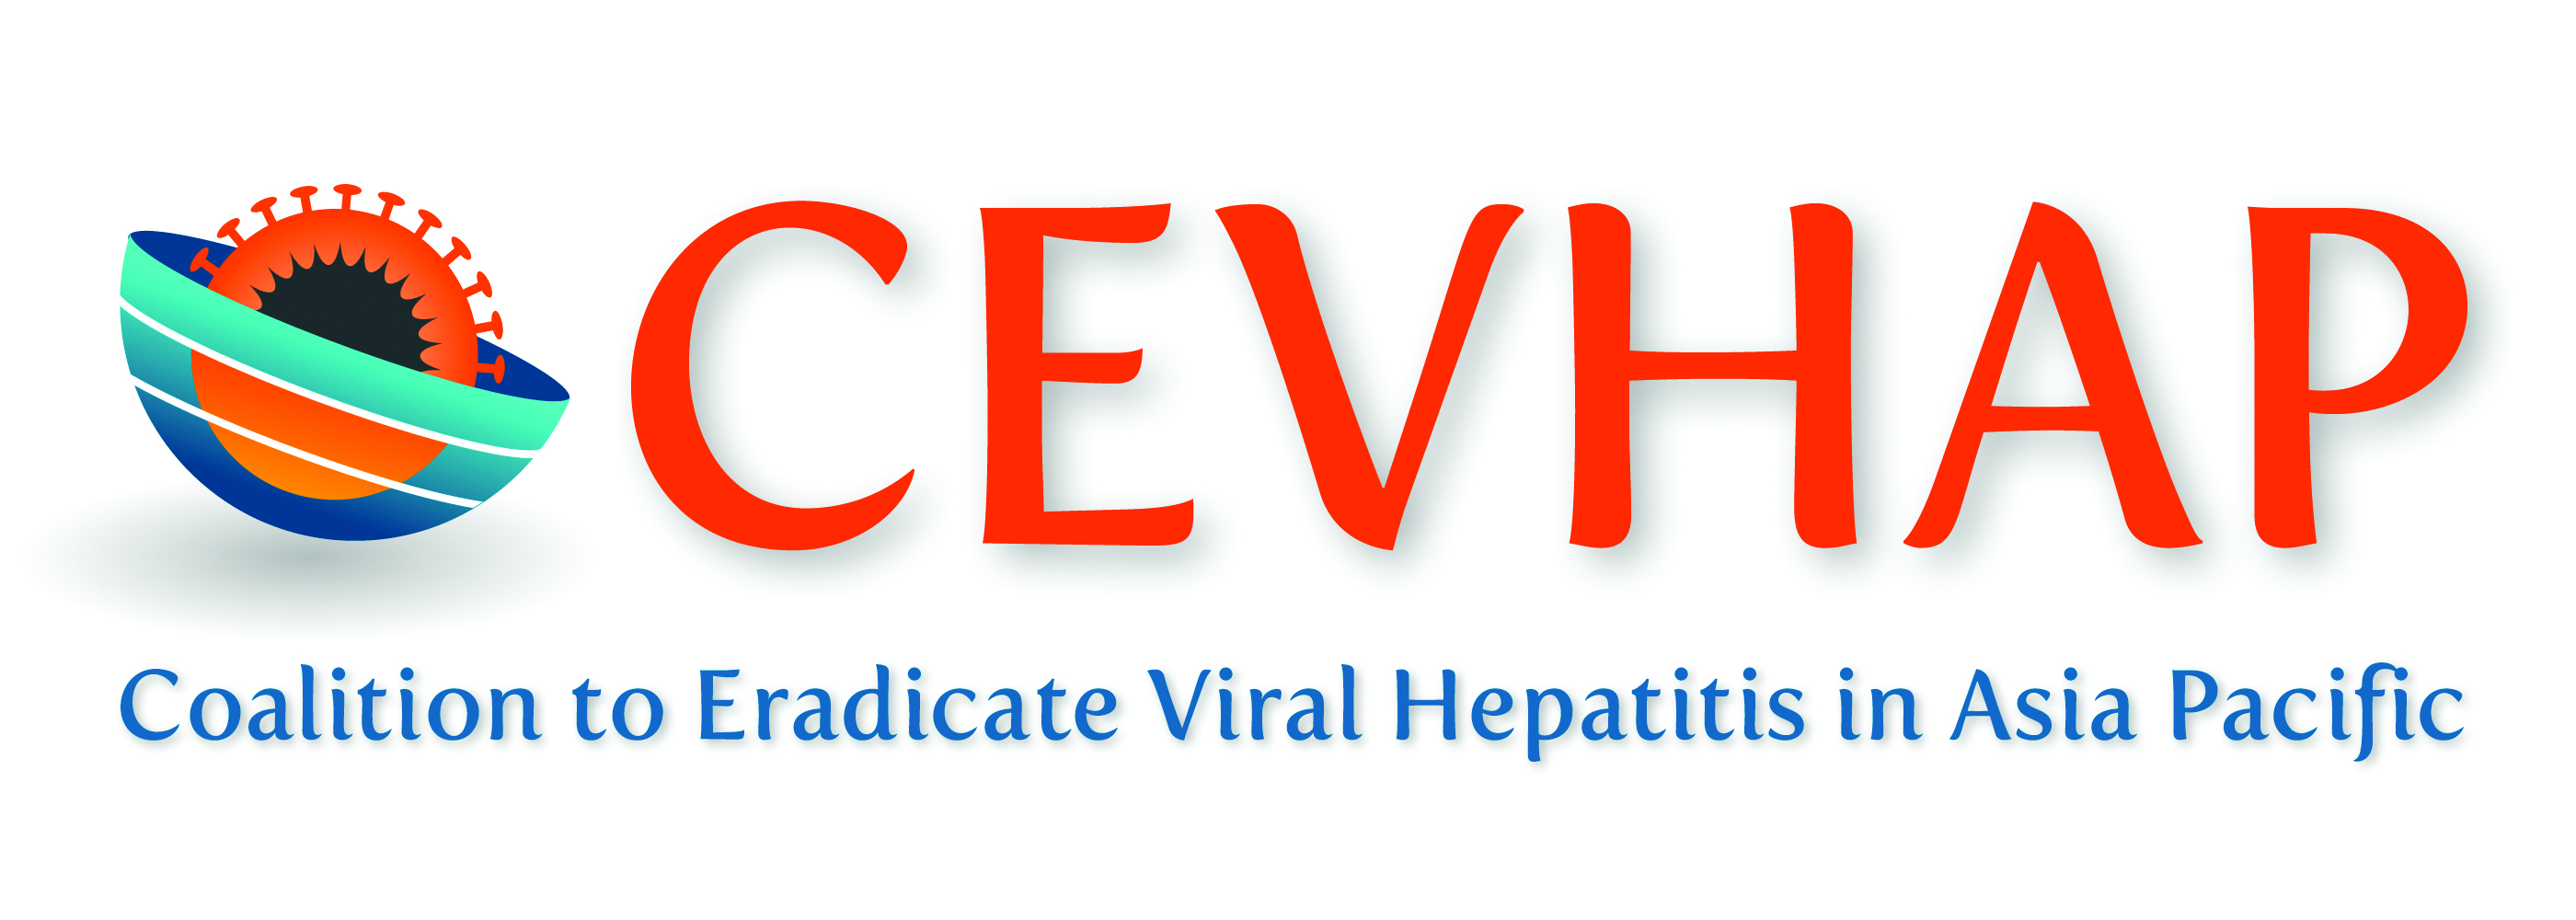 Coalition to Eradicate Viral Hepatitis in Asia Pacific